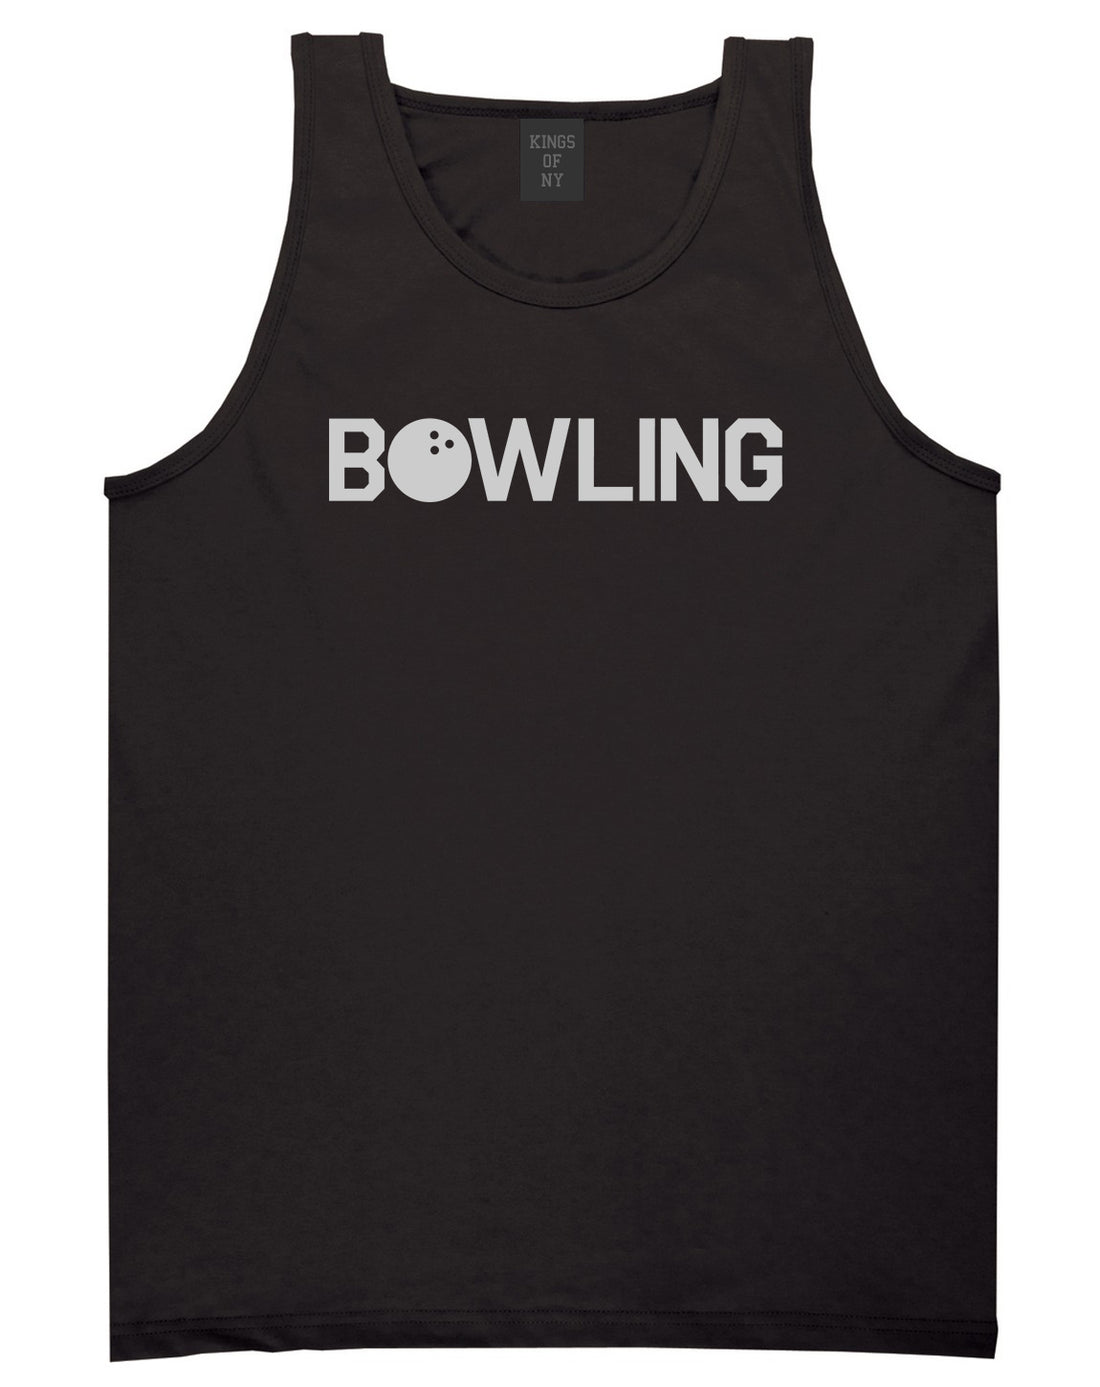 Bowling Black Tank Top Shirt by Kings Of NY